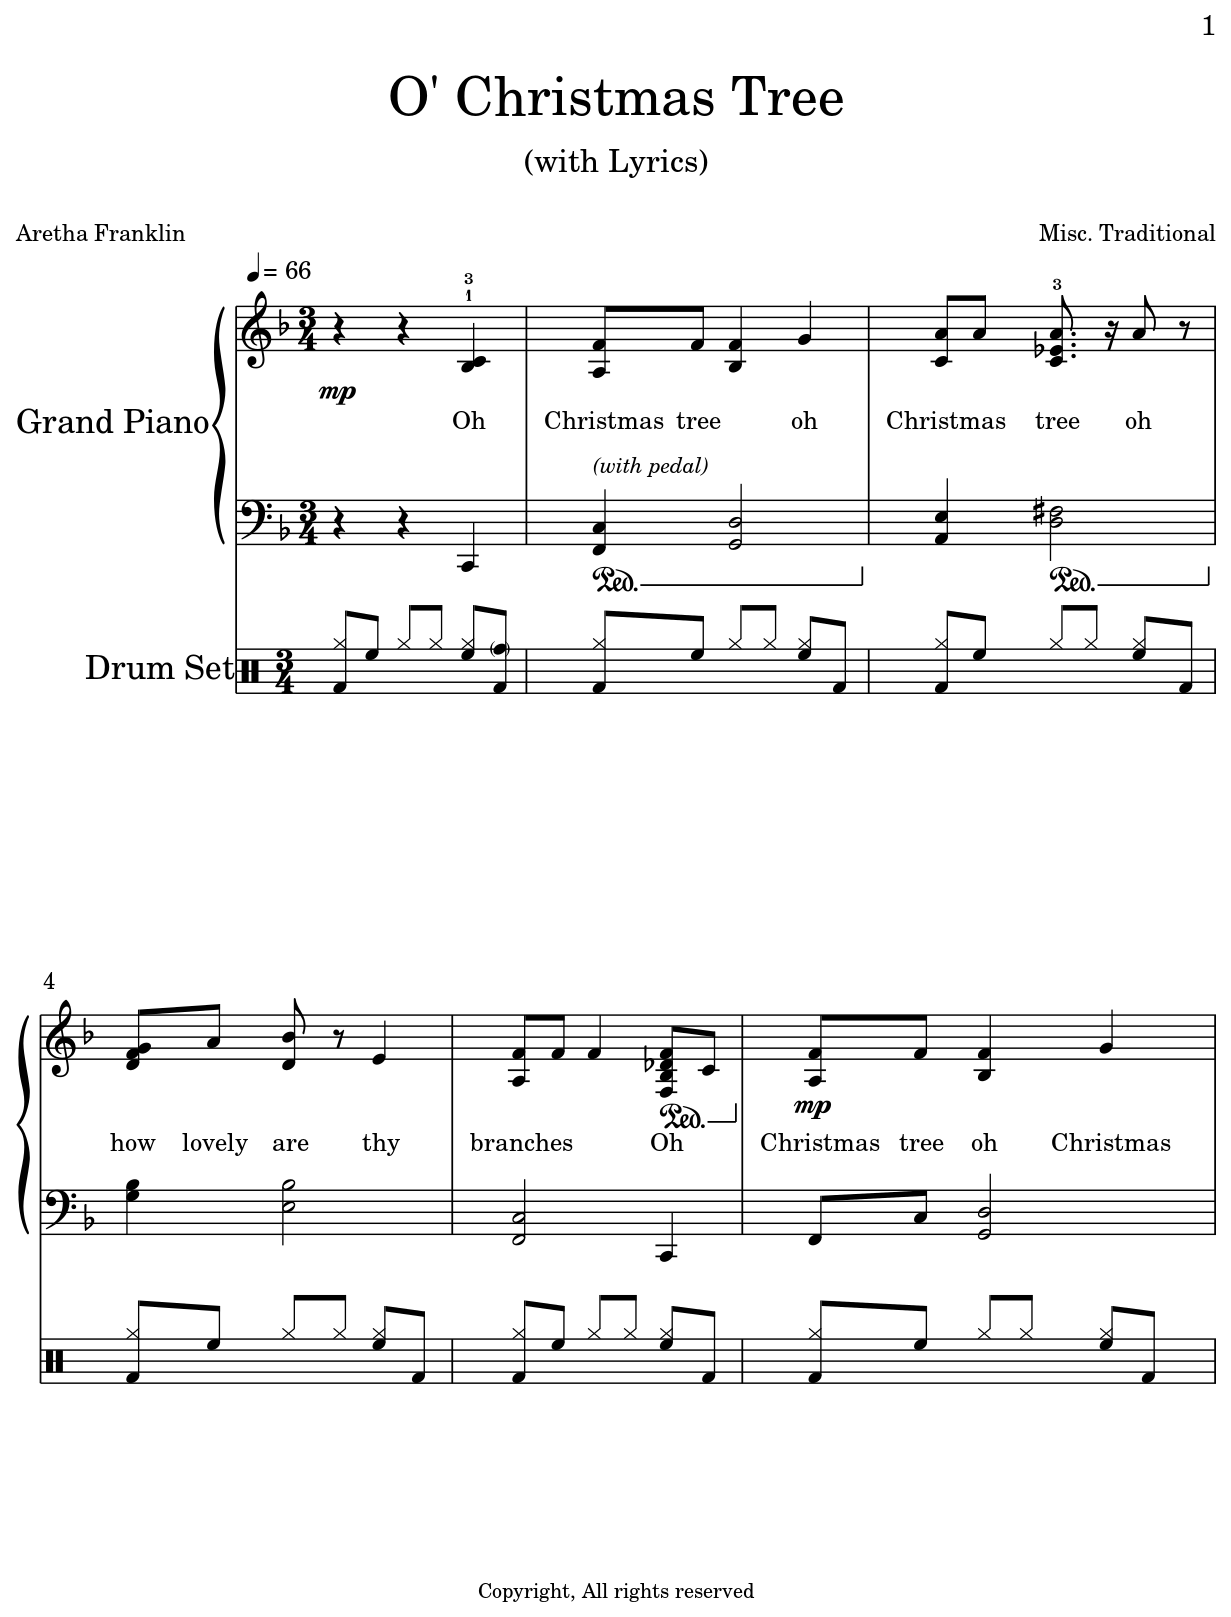 O' Christmas Tree - Sheet music for Piano, Drum Set